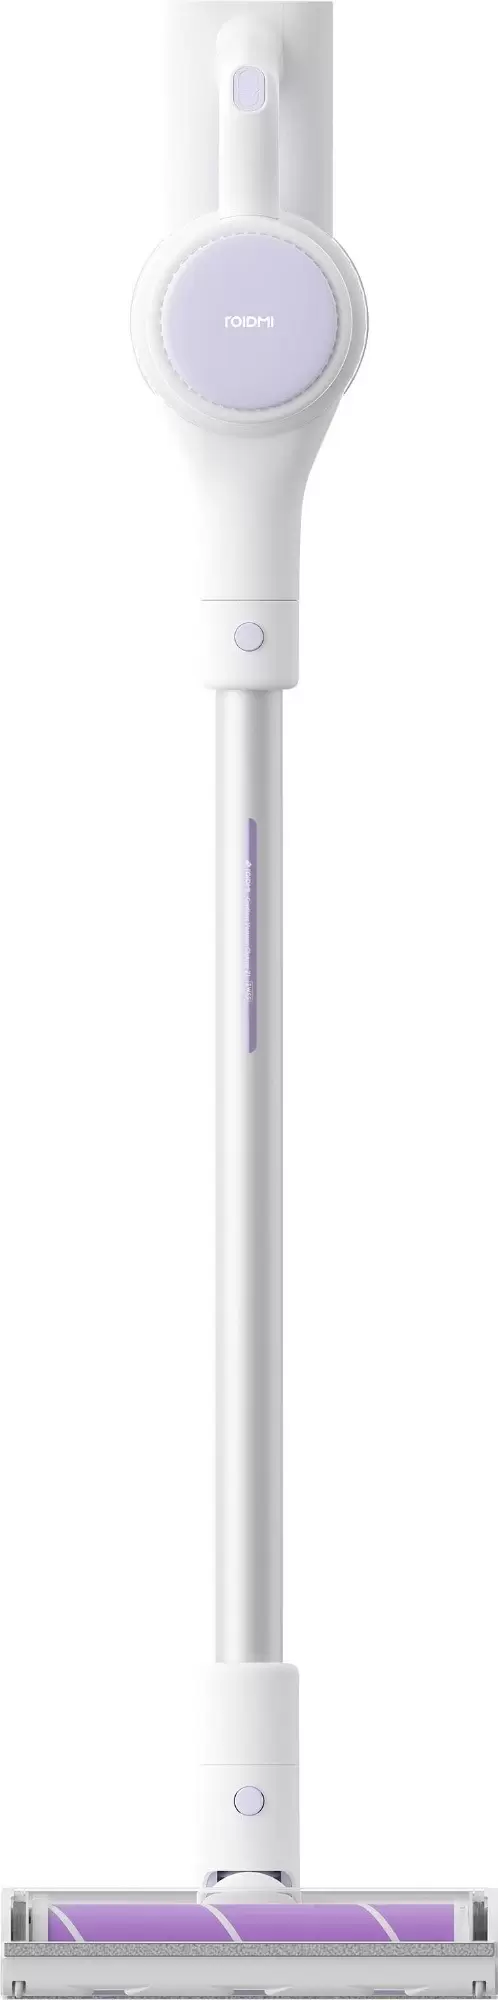 Aspirator vertical Xiaomi Roidmi Z1, alb